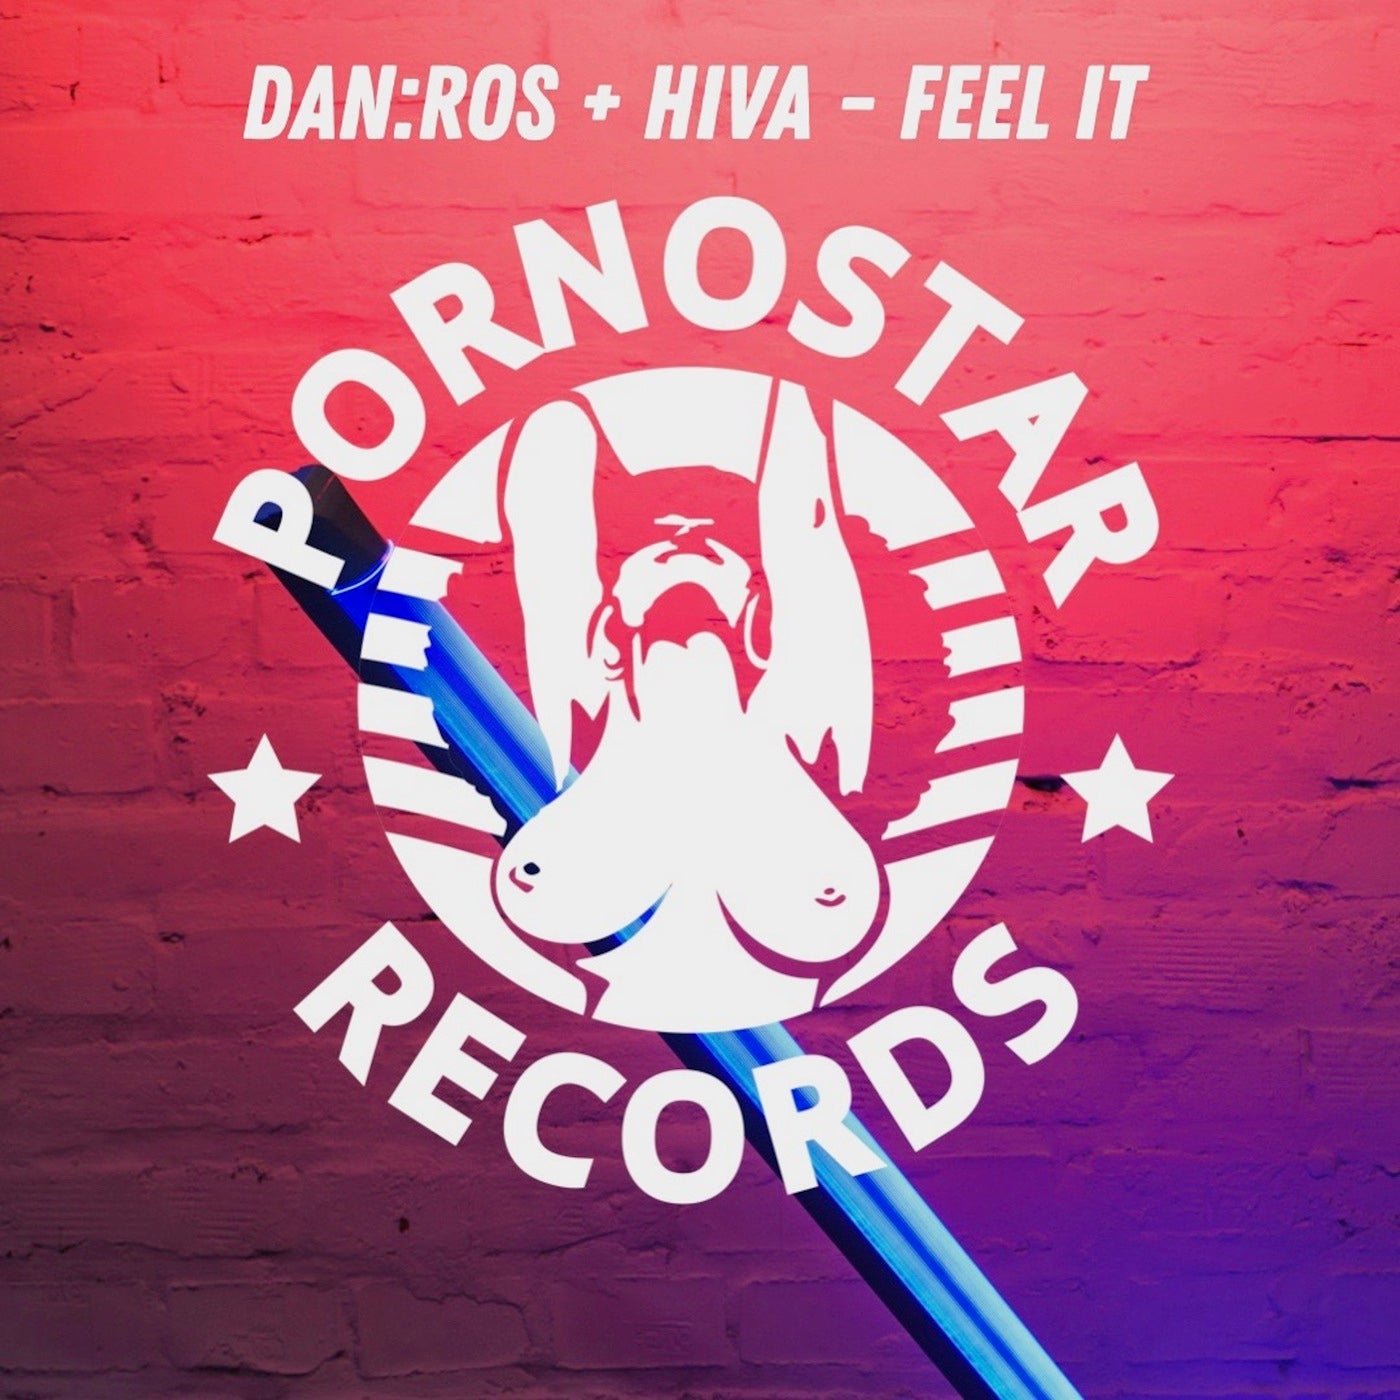 Hiva, Dan:Ros - Feel It (Original Mix)